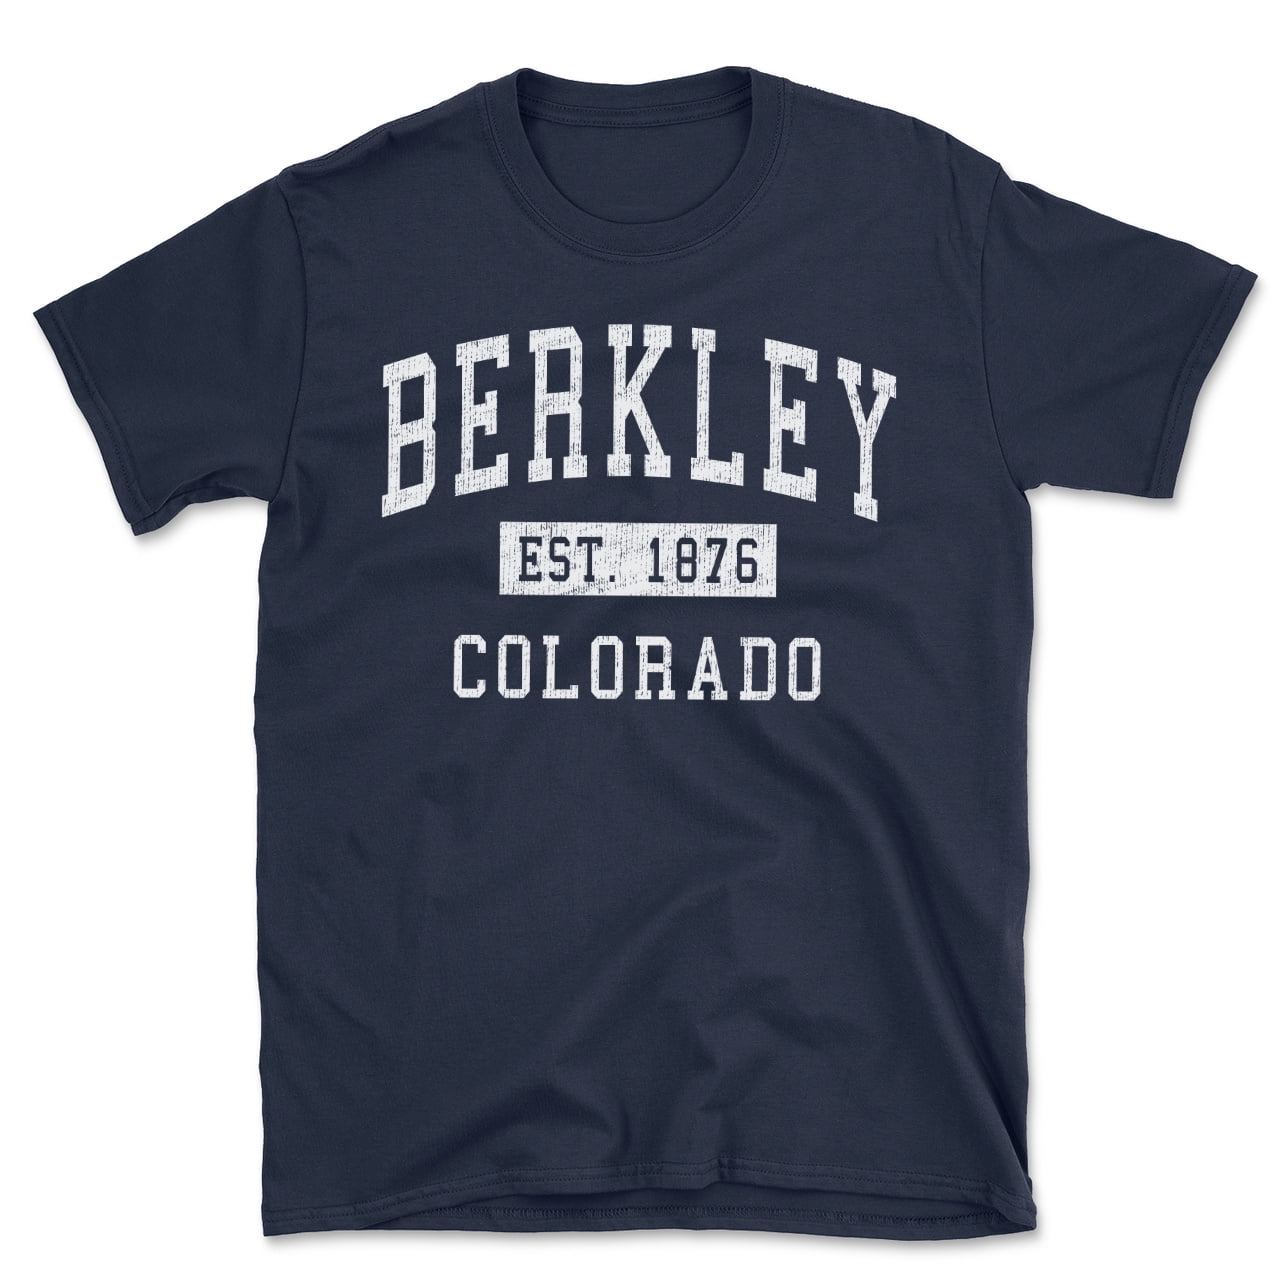 Berkley Colorado Classic Established Men's Cotton T-Shirt